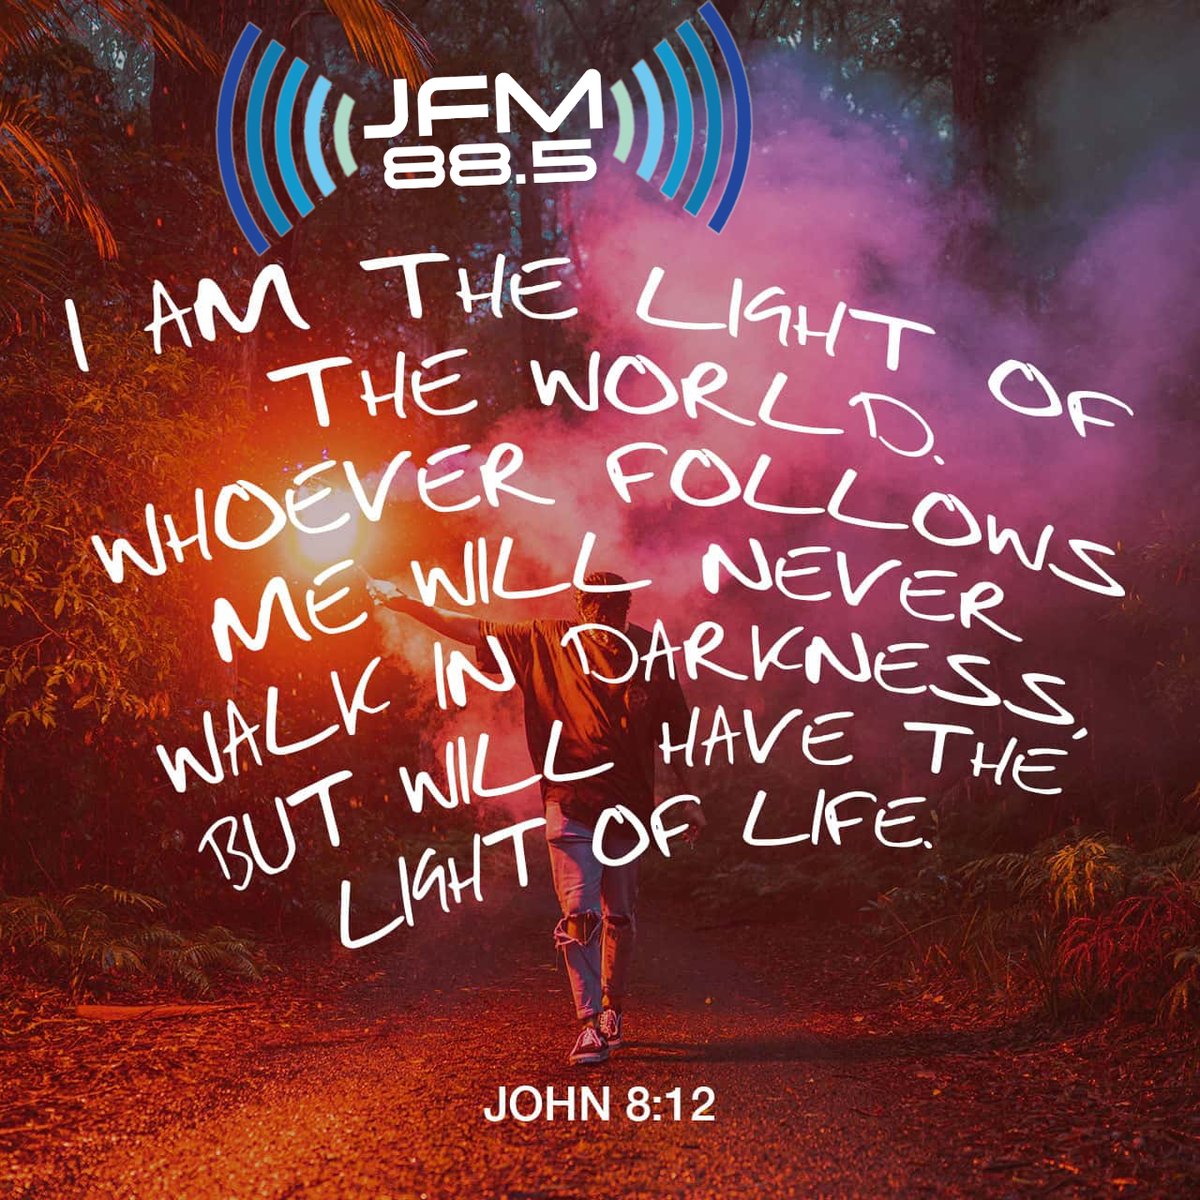 Your Word of Life, from John 8:12 NLT #wordoflife #885jfm #blessed #lightoftheworld #follow #life